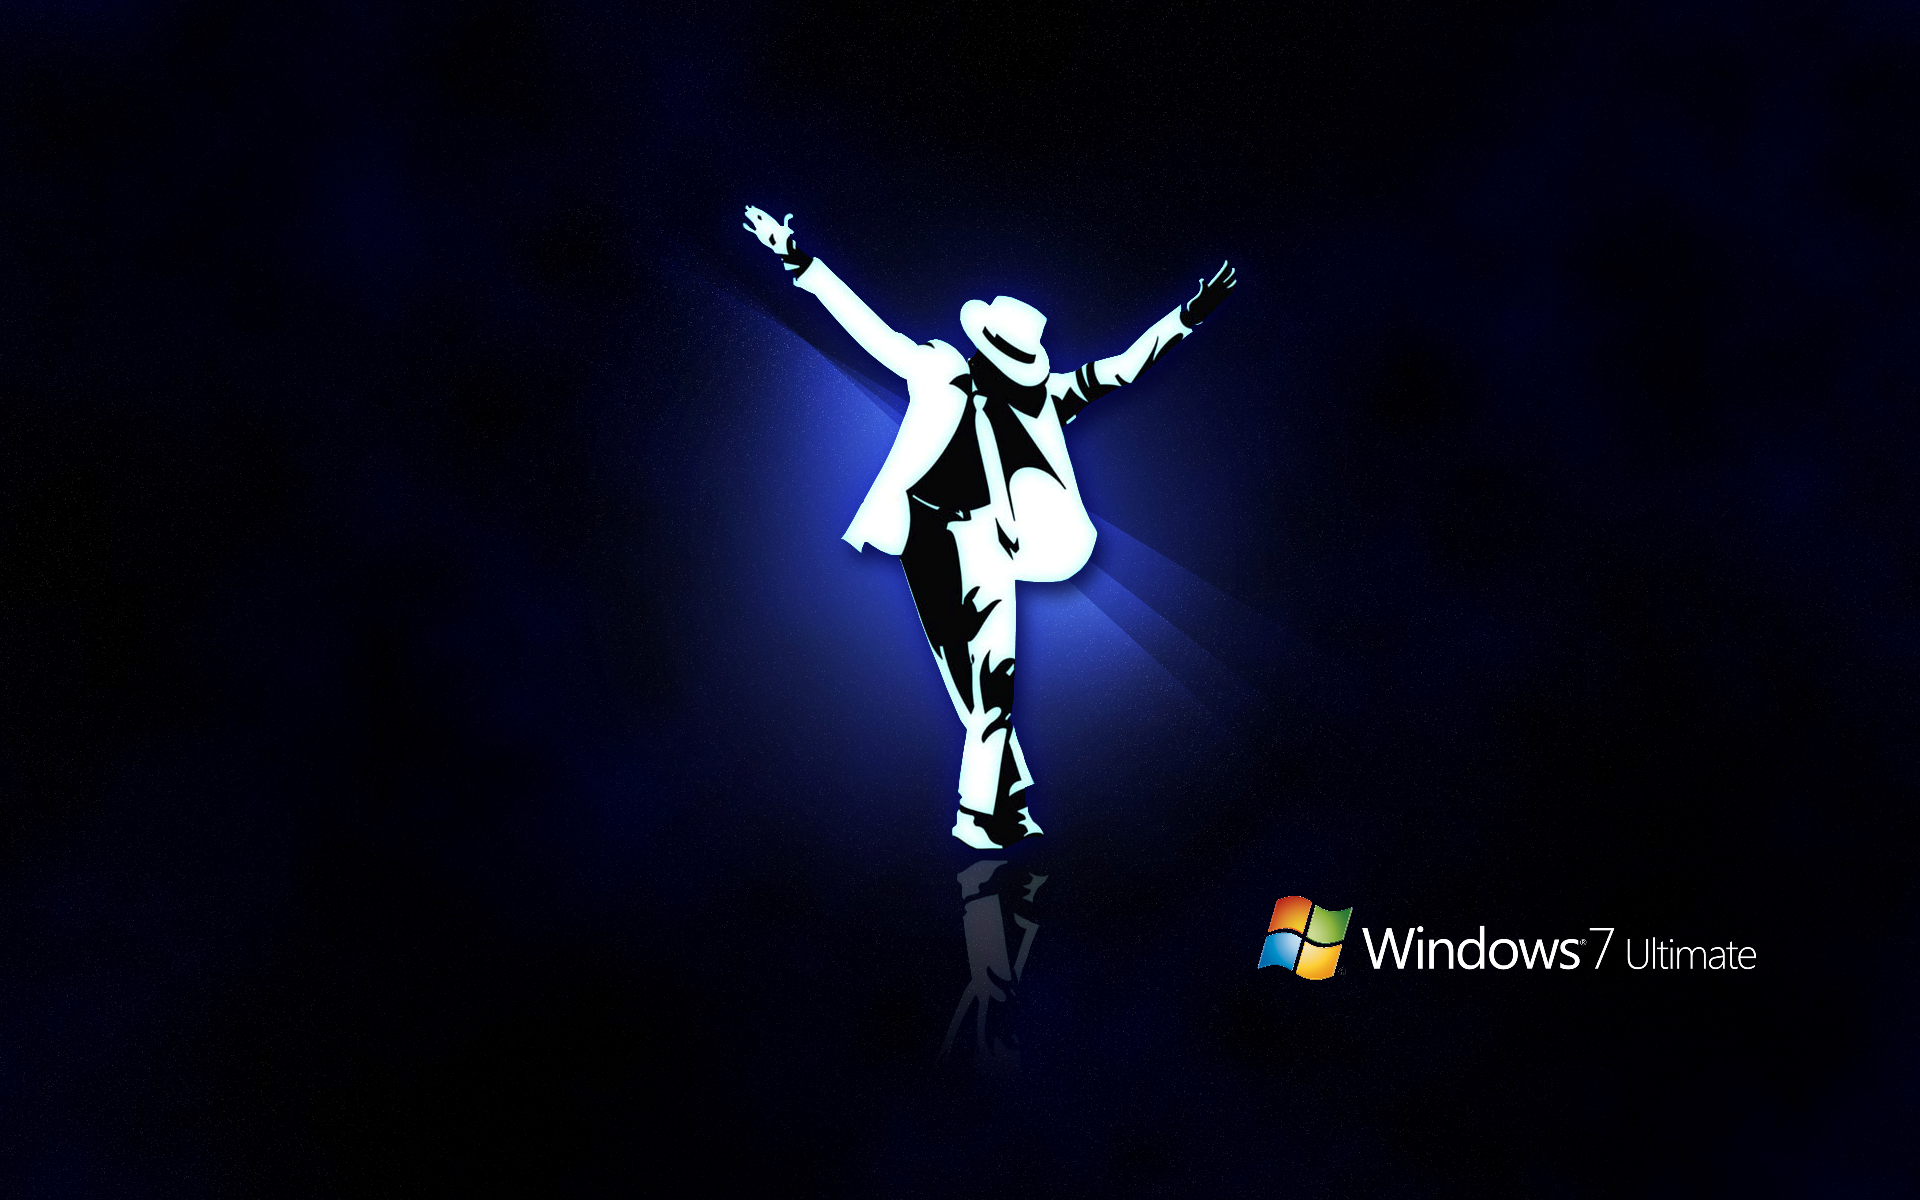 Michael Jackson Wallpaper and Theme for Windows 7 Redmond Pie